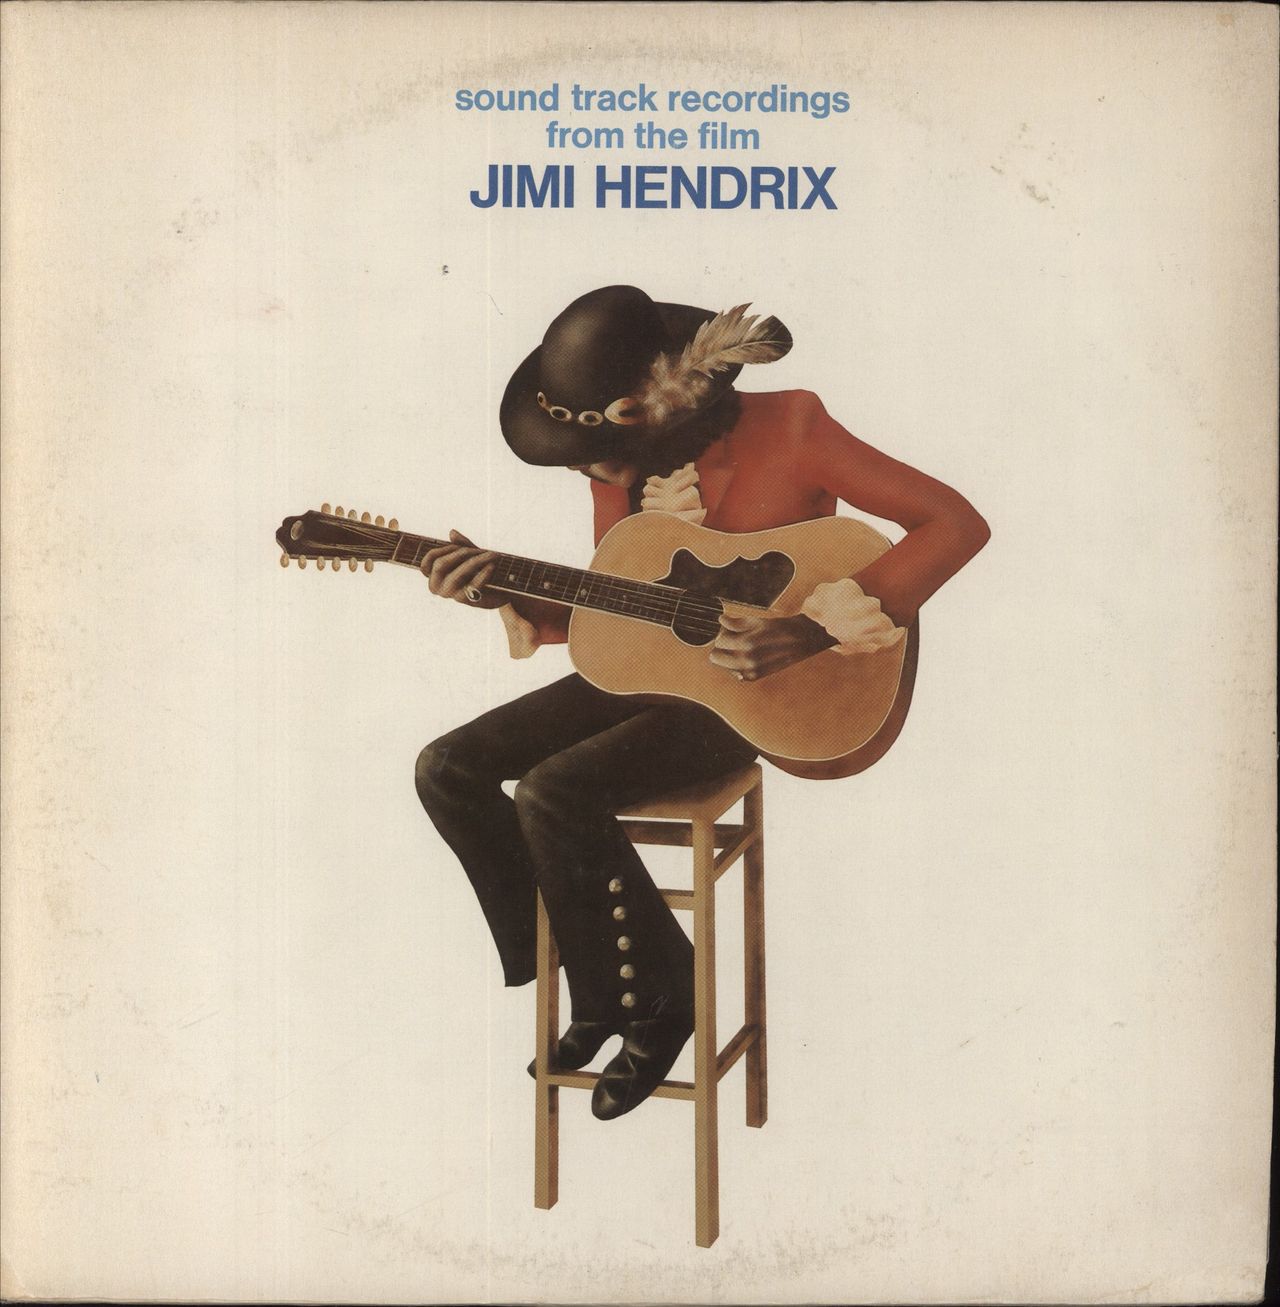 Jimi Hendrix Sound Track Recordings From The Film US 2-LP vinyl 